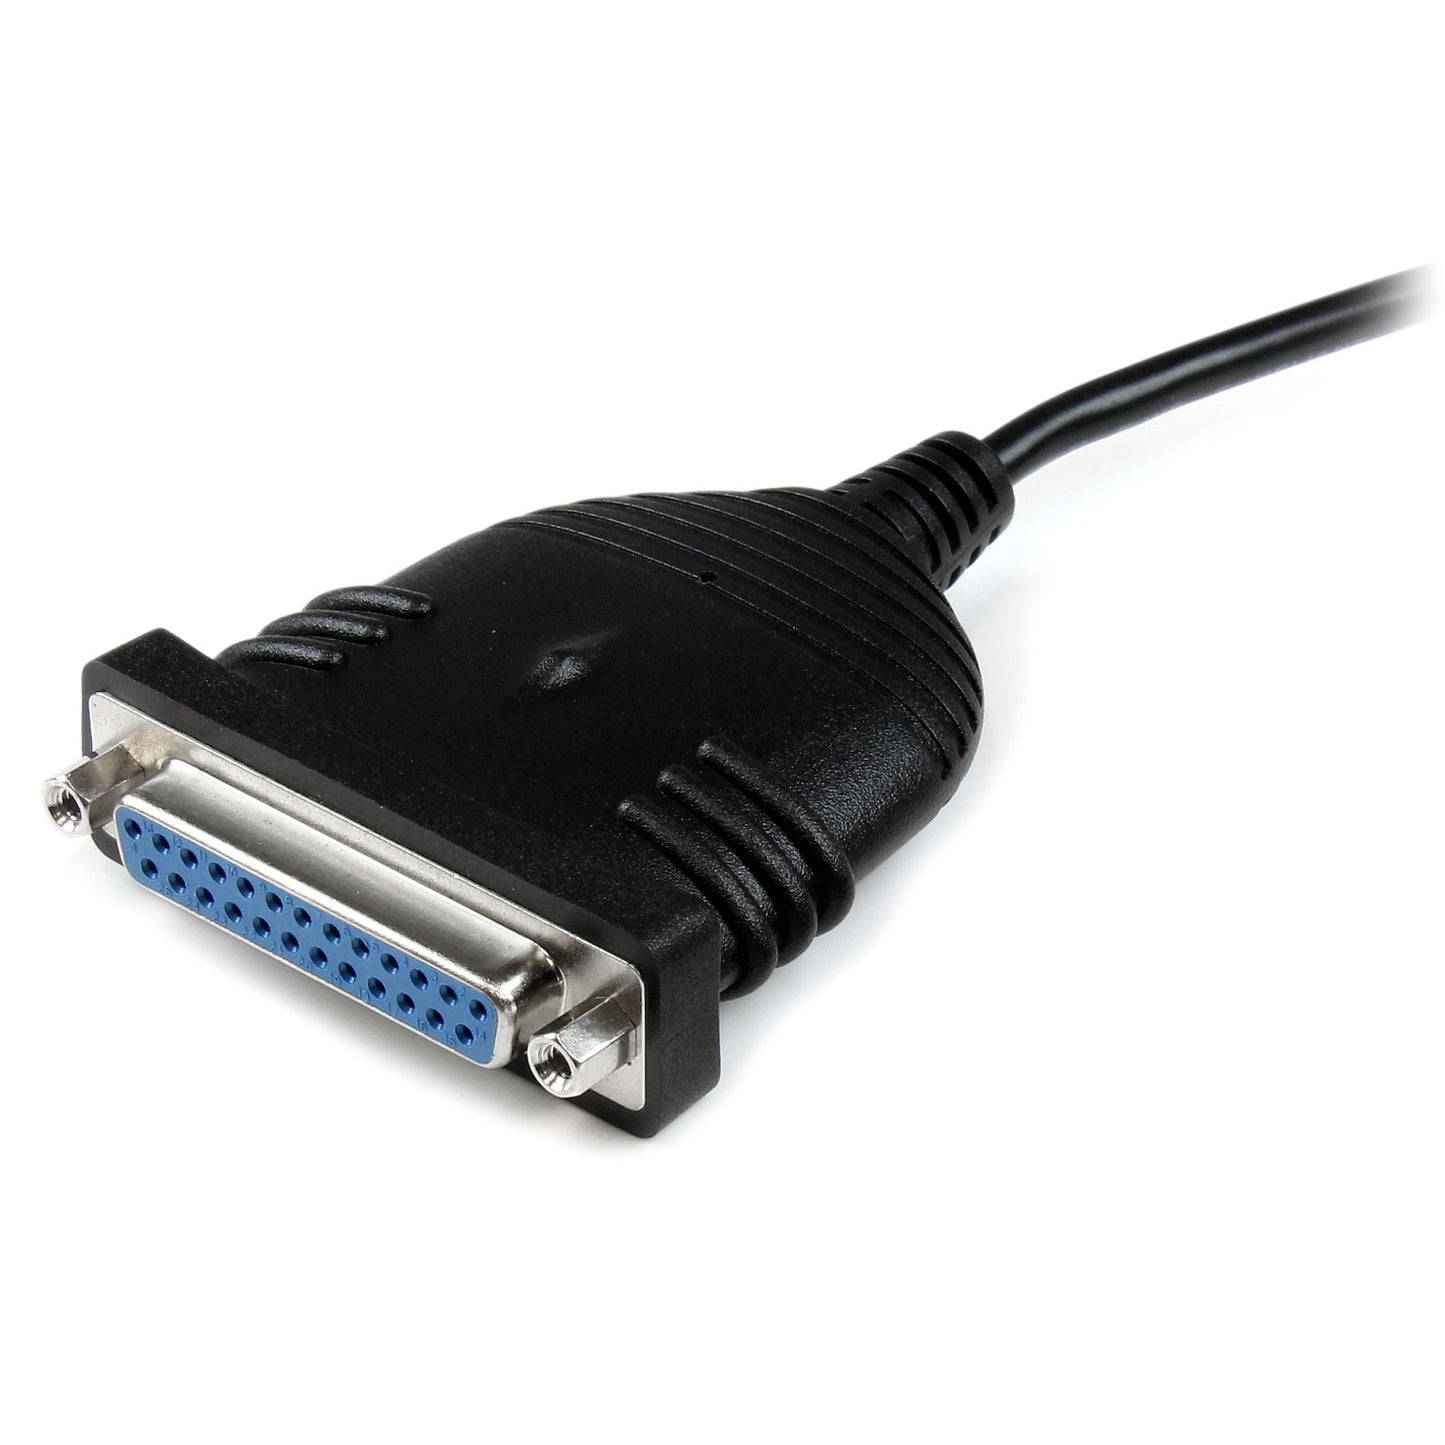 Cable de 1.8m adaptador de STARTECH  impresora paralelo DB25 a USB A, color negro